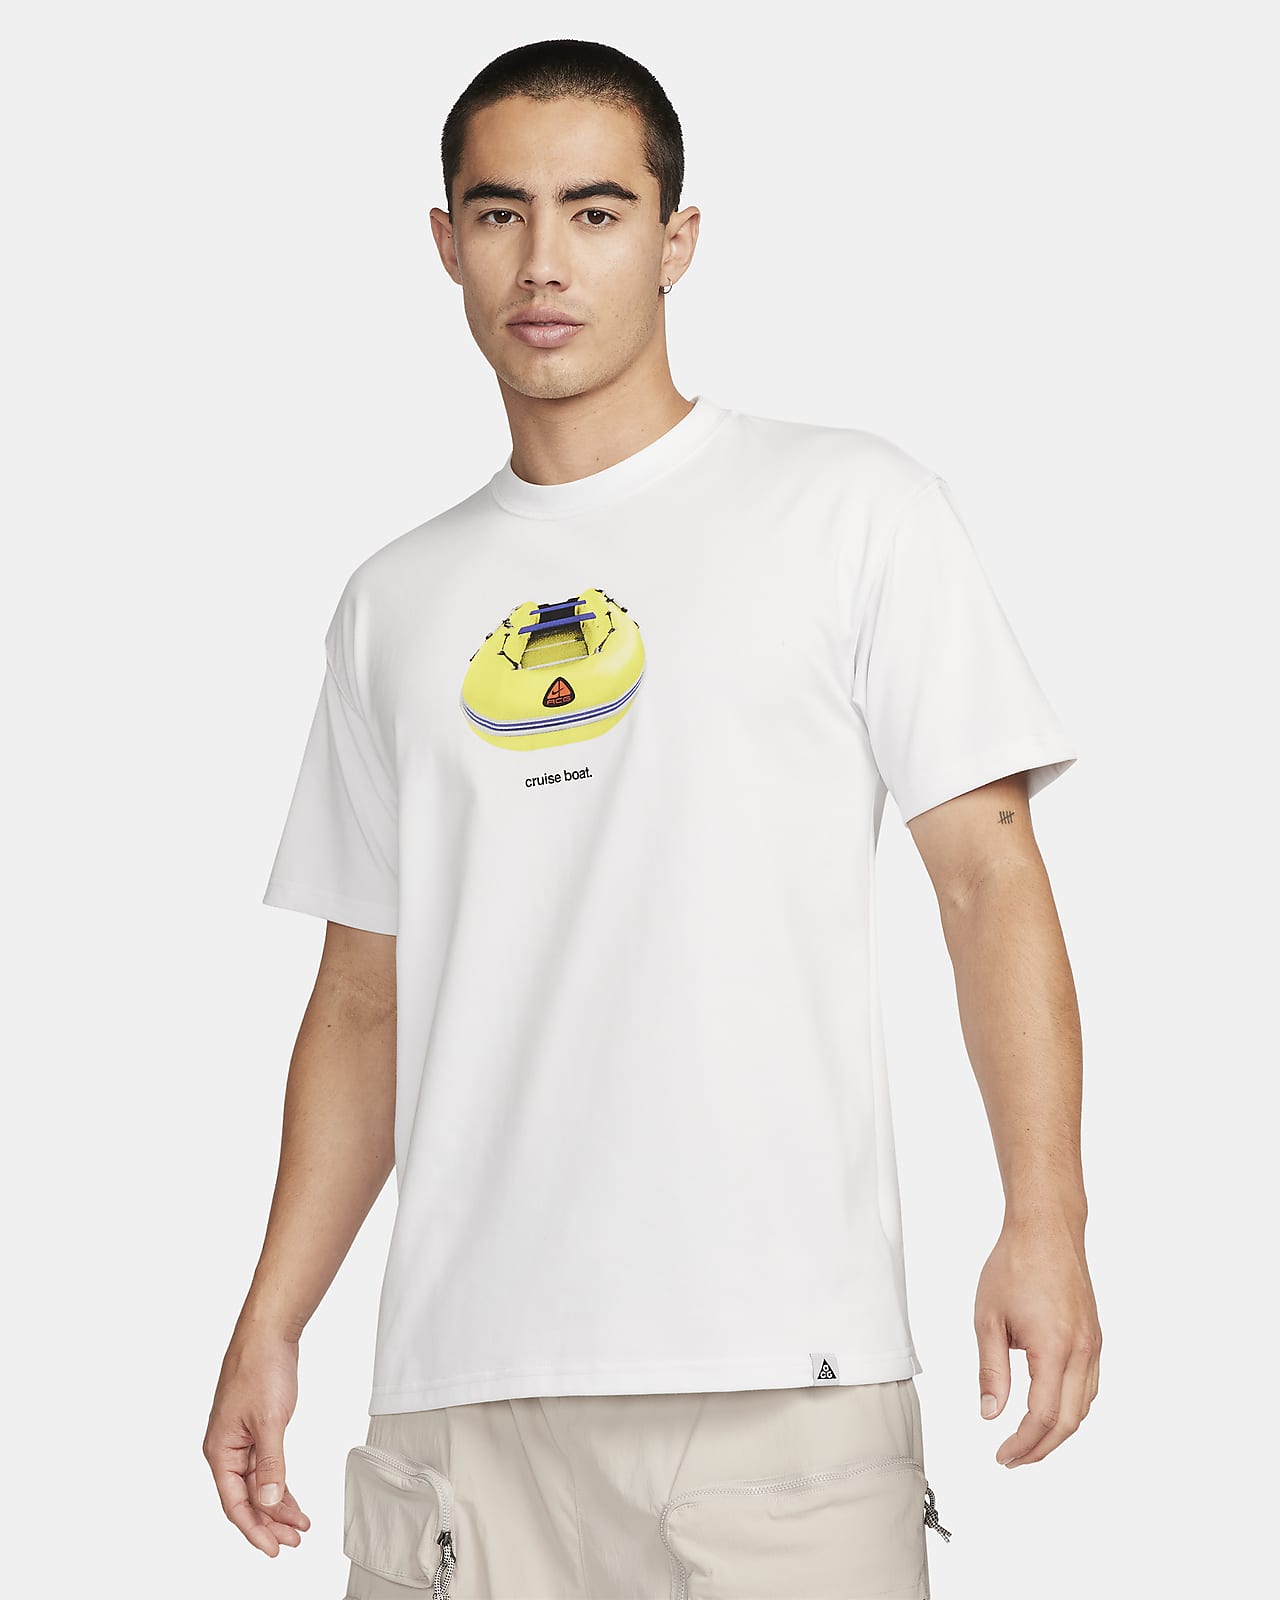 Nike ACG 'Cruise Boat' Men's Dri-FIT T-Shirt